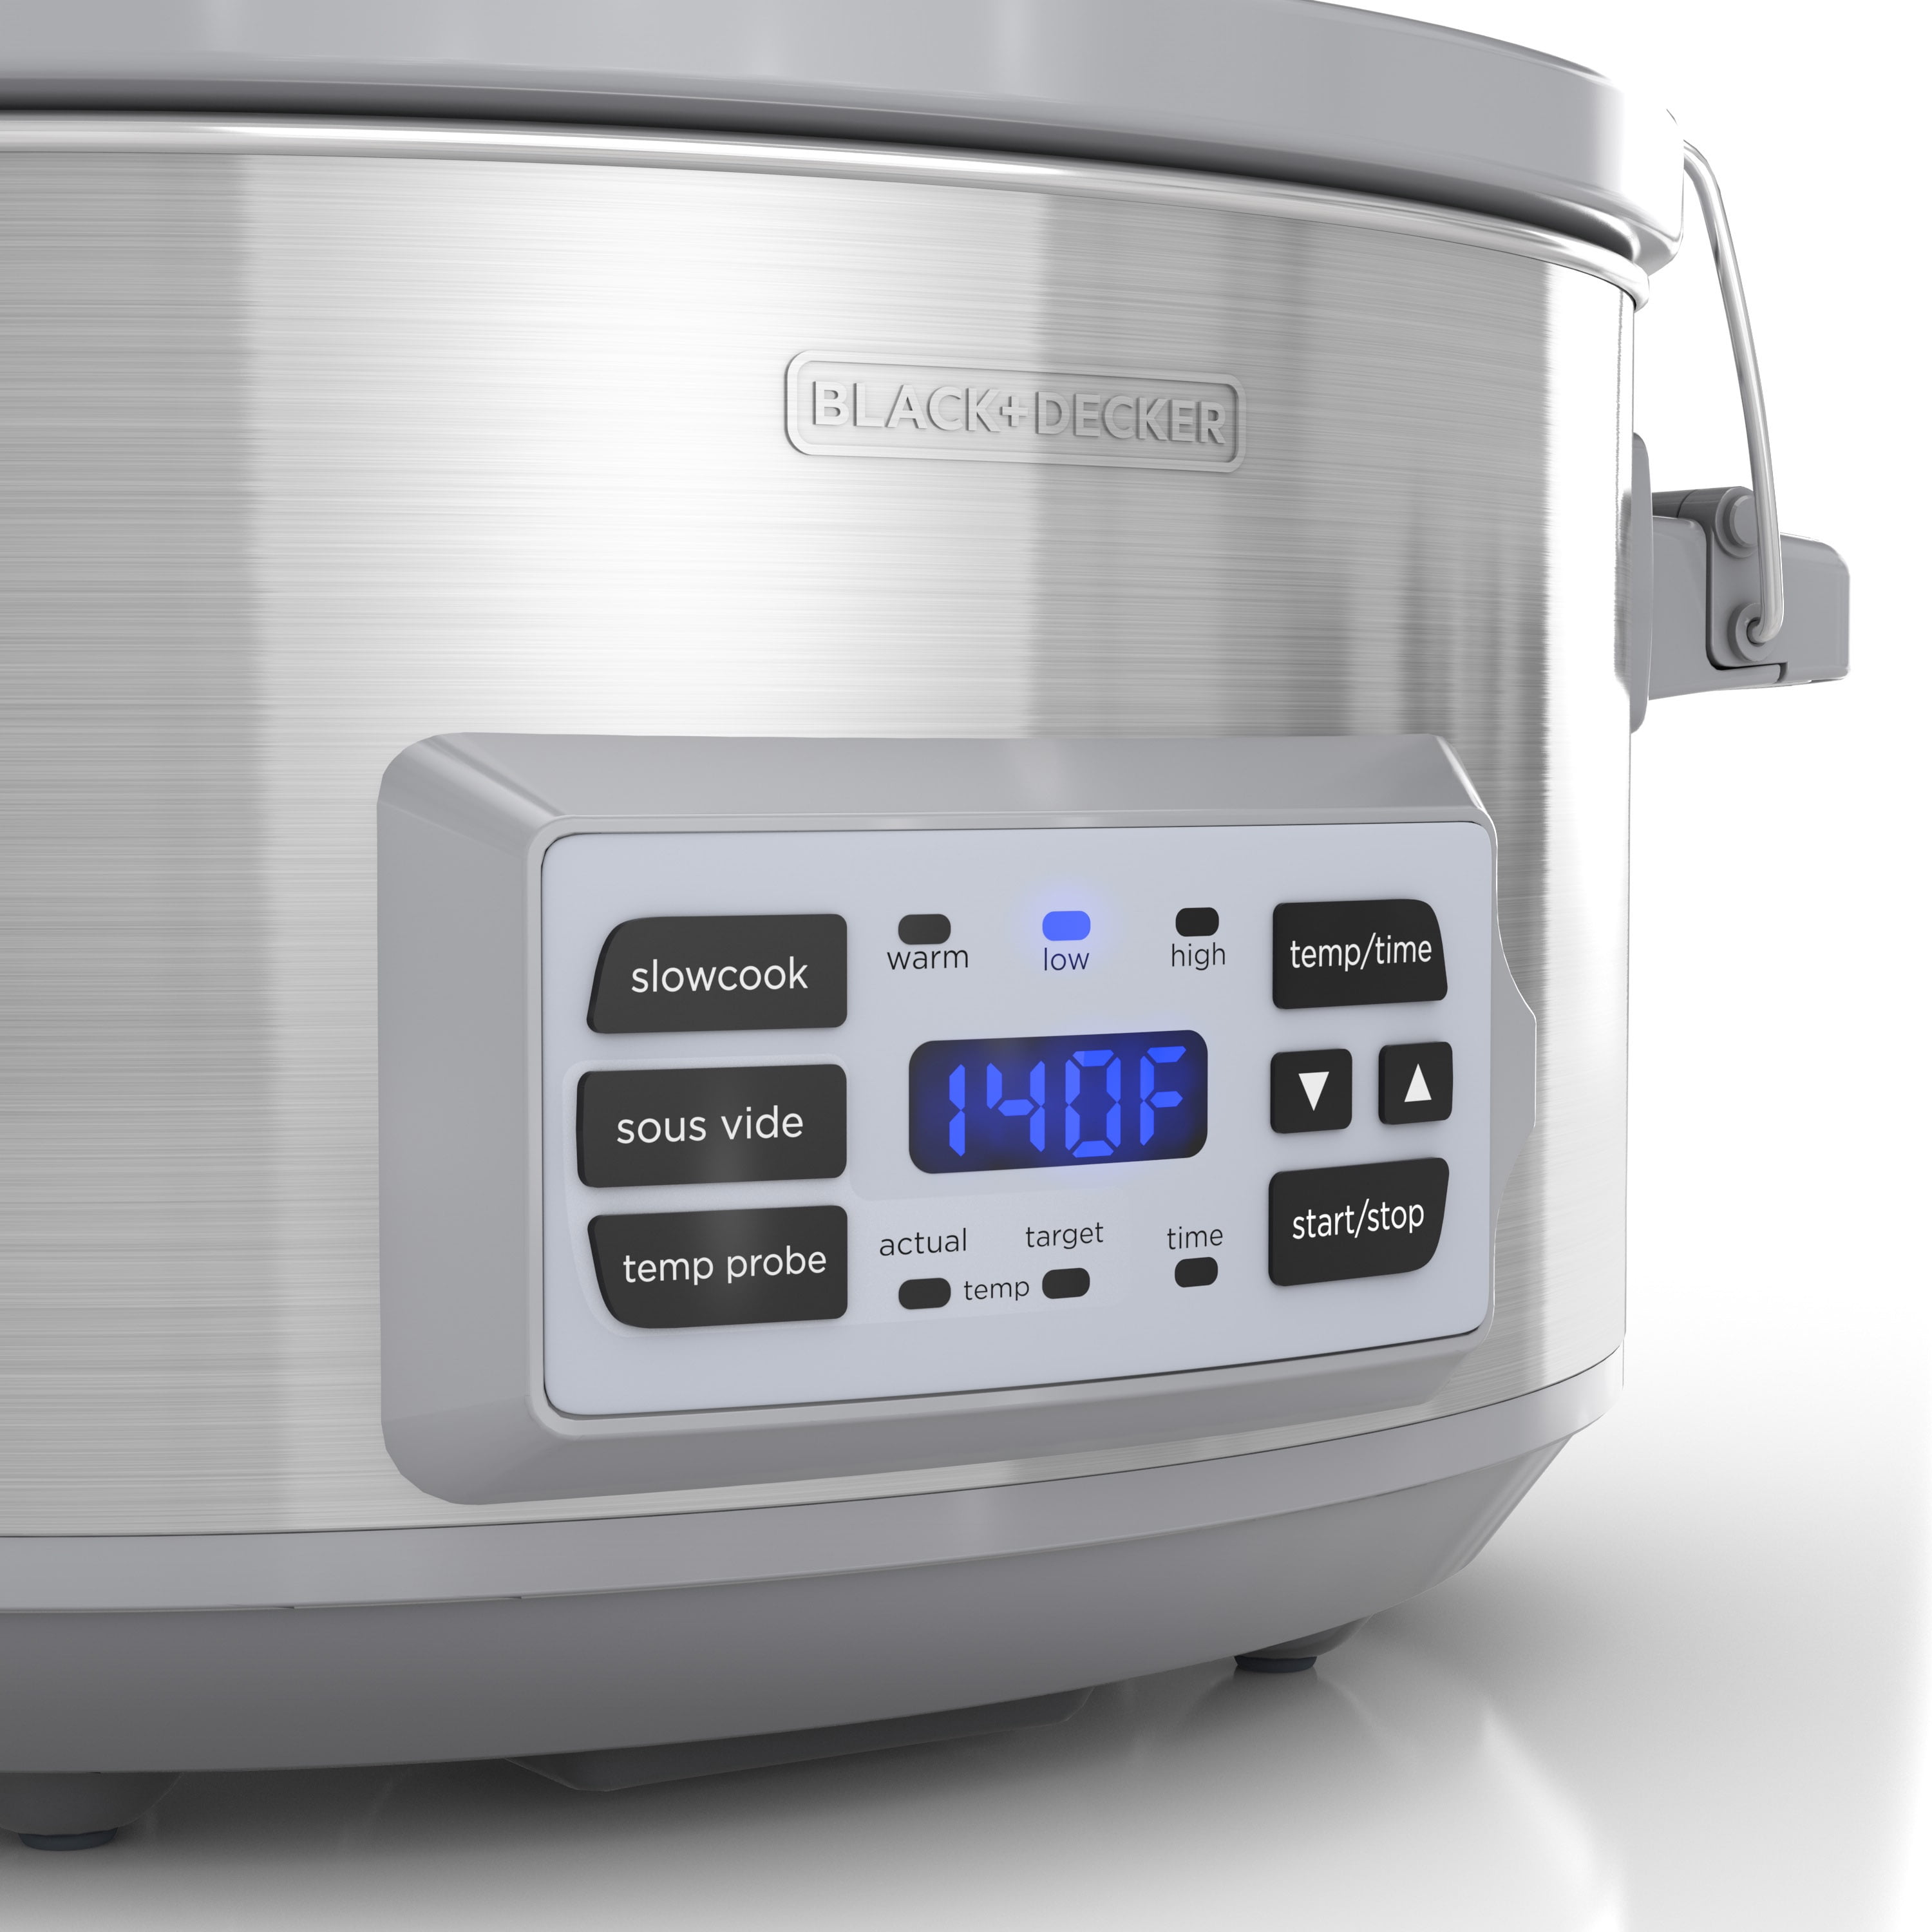 BLACK+DECKER 7-Quart Digital Slow Cooker with Temperature Probe +